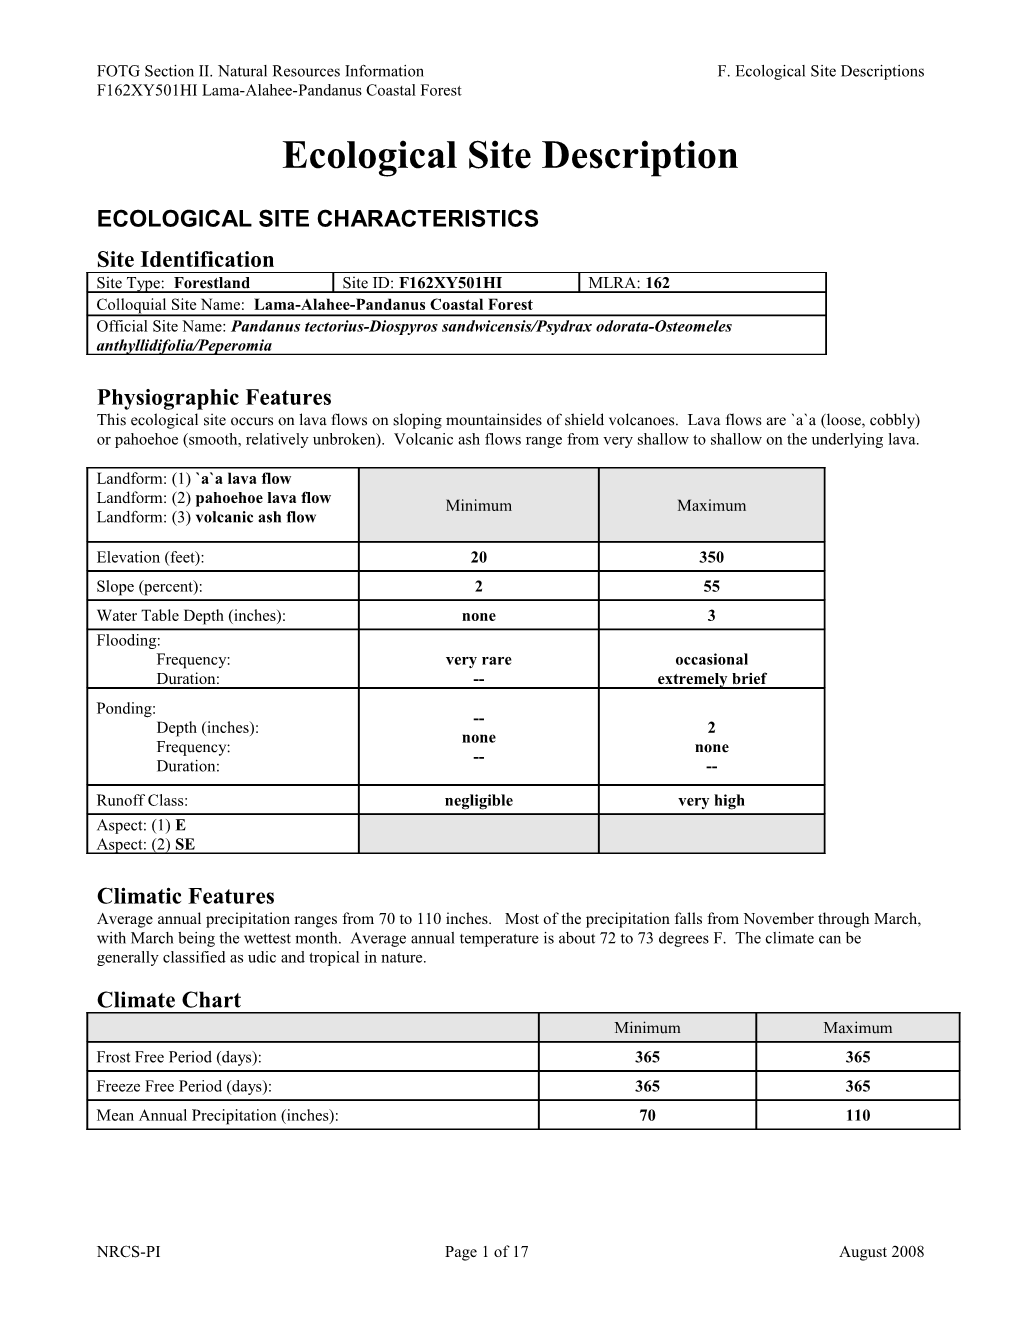 FOTG Section II. Natural Resources Informationf. Ecological Site Descriptions